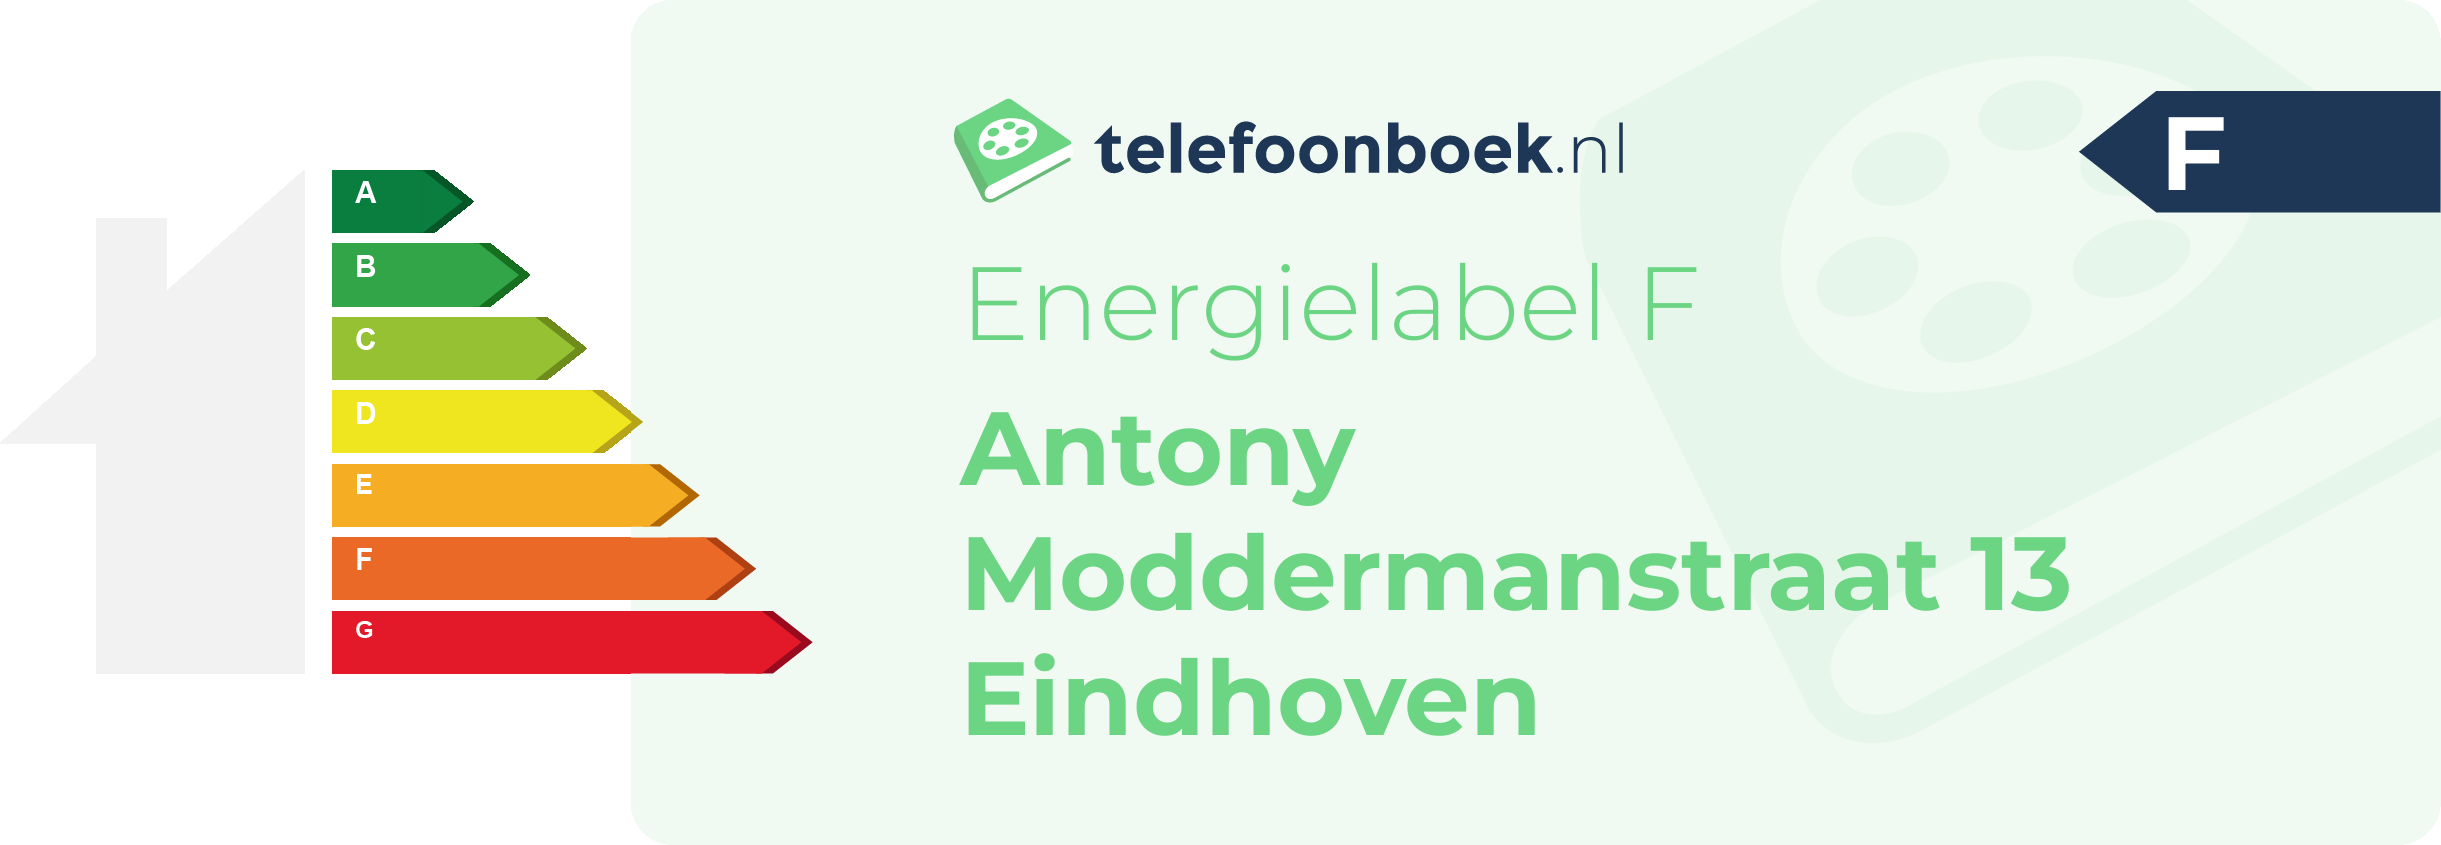 Energielabel Antony Moddermanstraat 13 Eindhoven